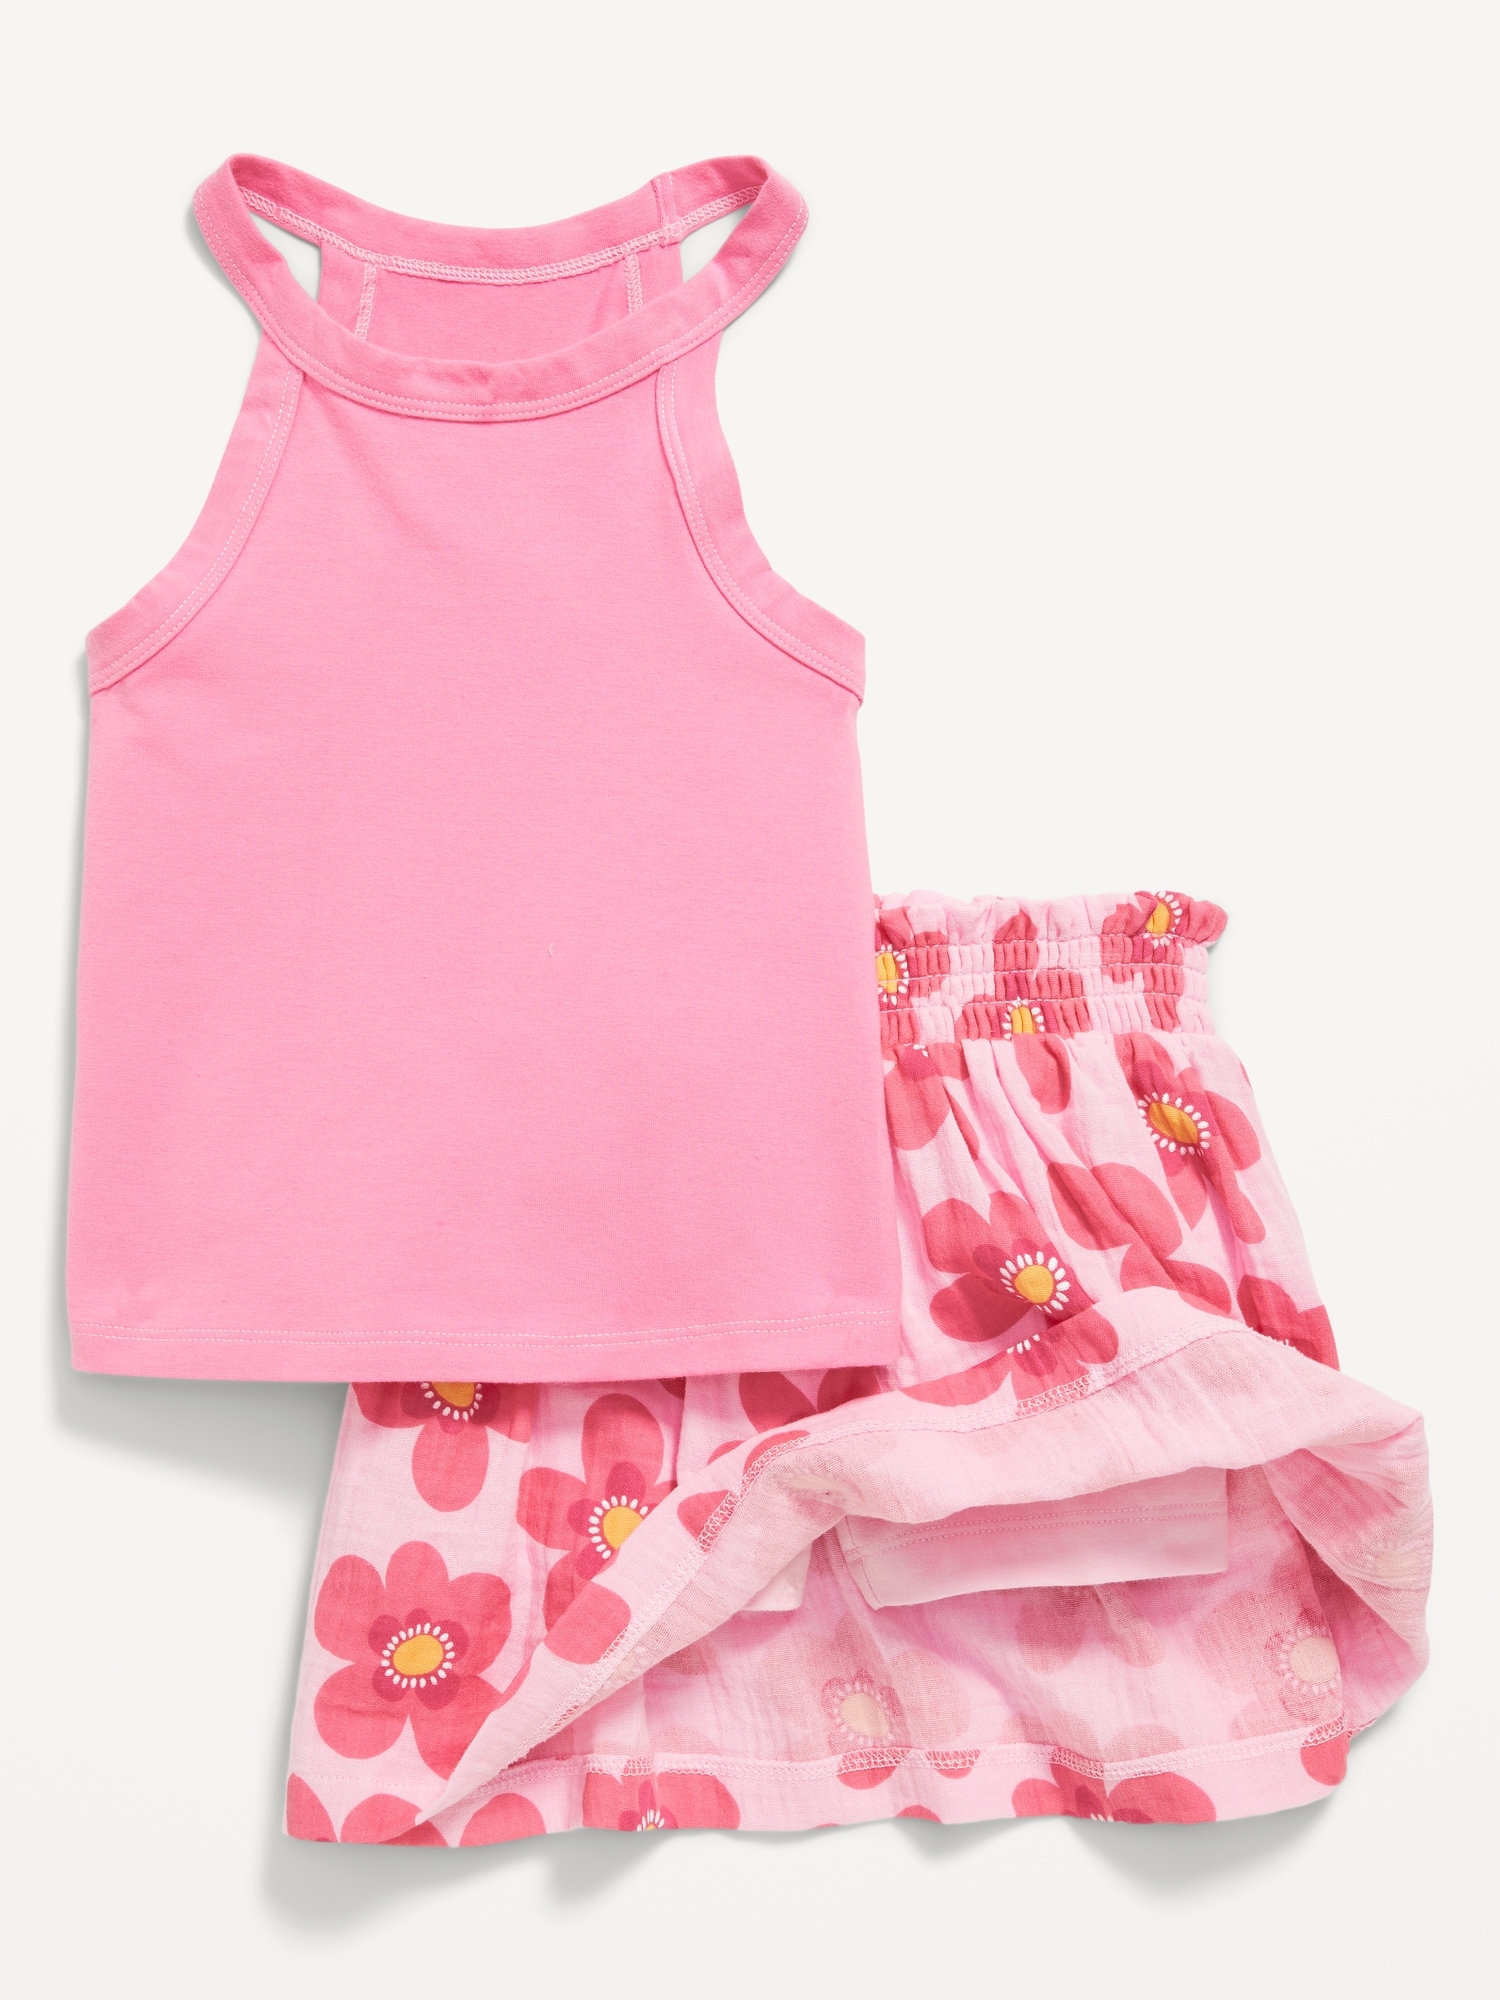 Sleeveless Tank Top and Skort Set for Toddler Girls Hot Deal